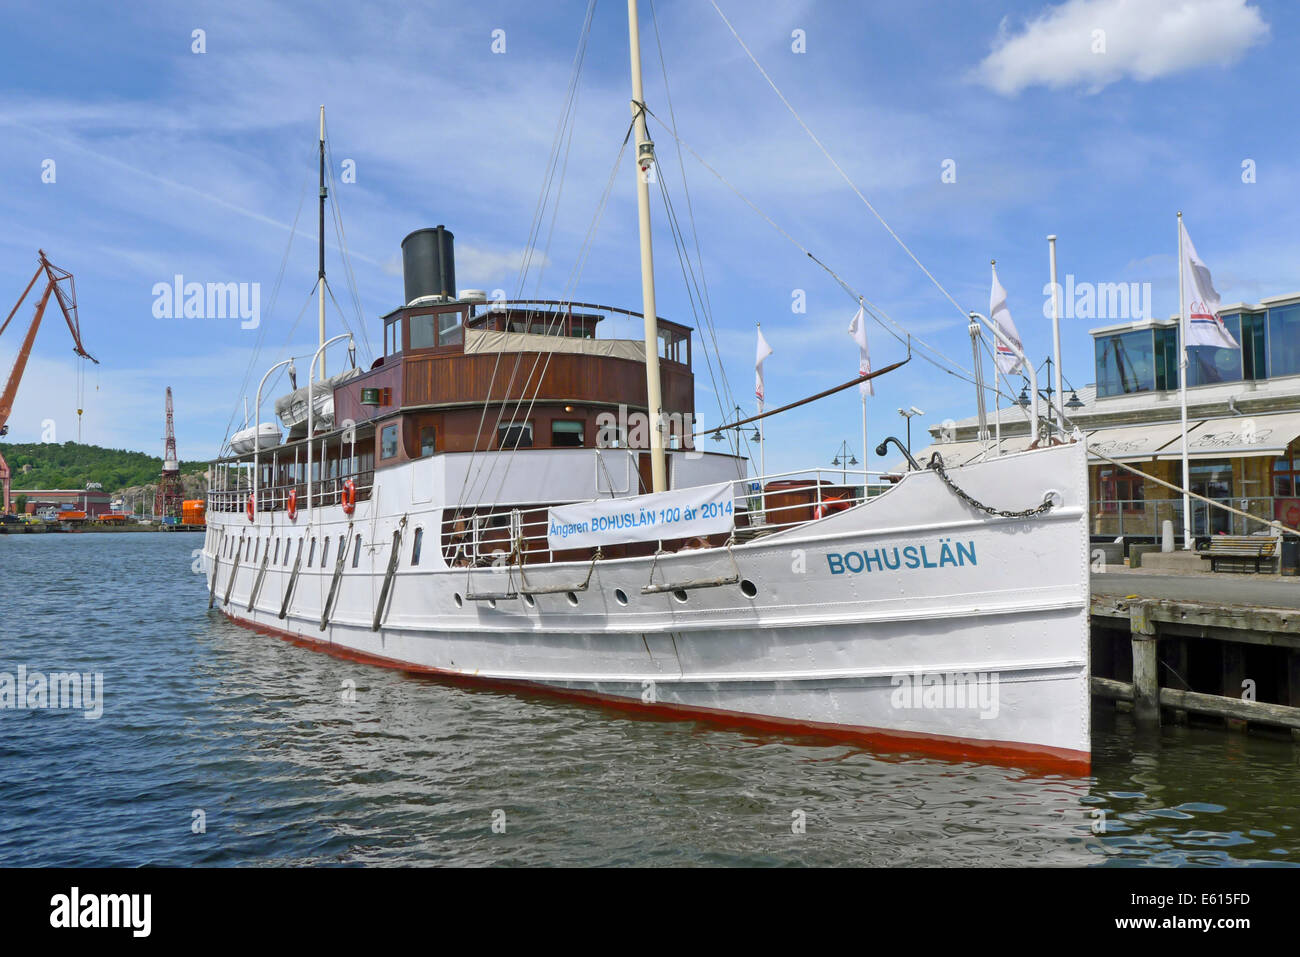 Der Dampfer BOHUSLÄN vertäut am Packhuskajen im Hafen von Göteborg Schweden Stockfoto